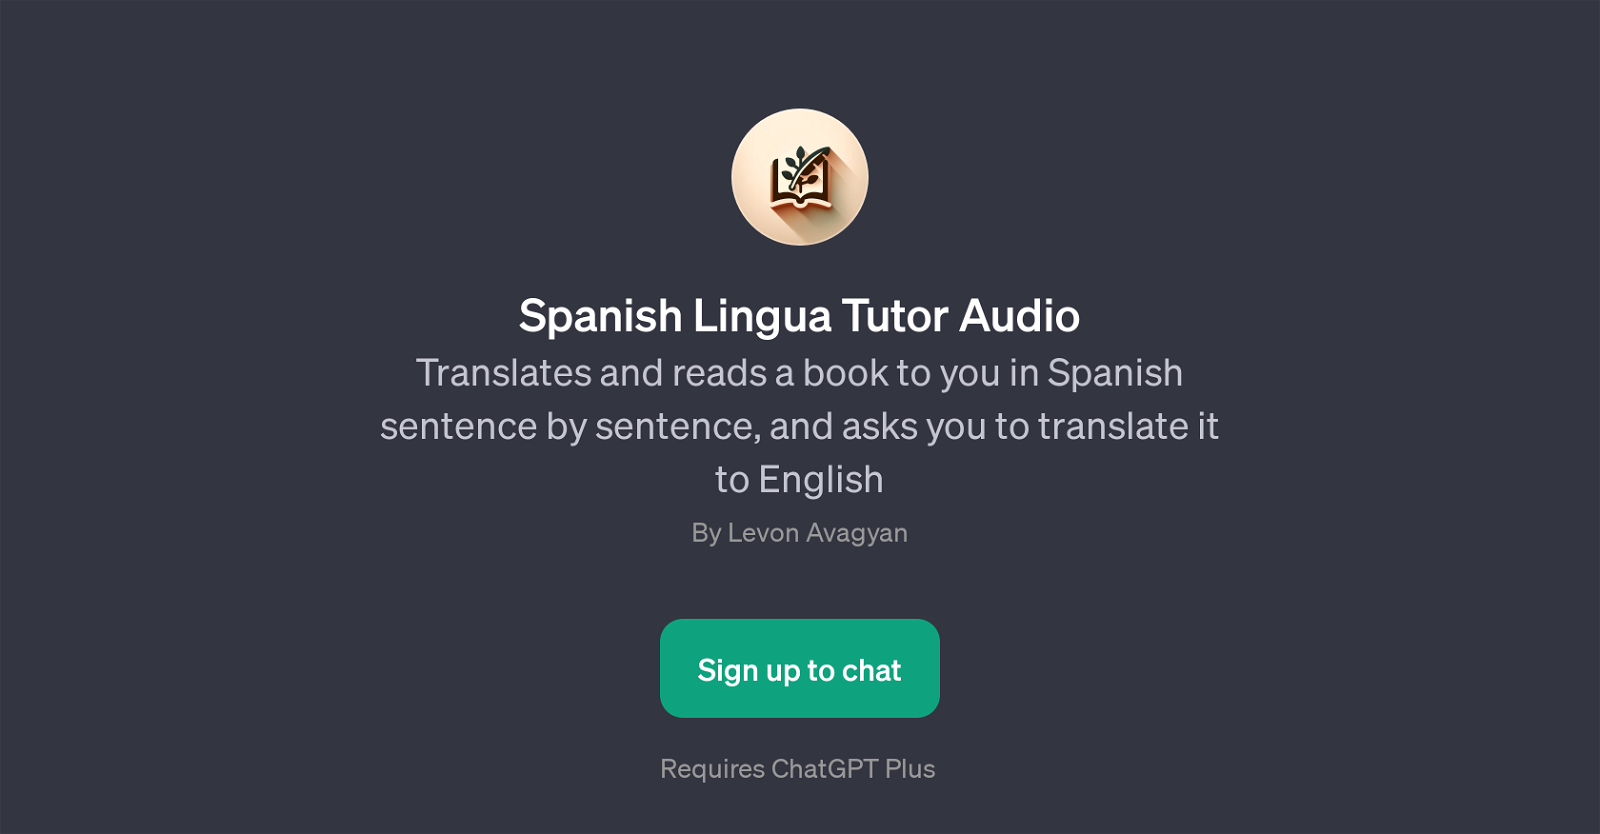 Spanish Lingua Tutor Audio website